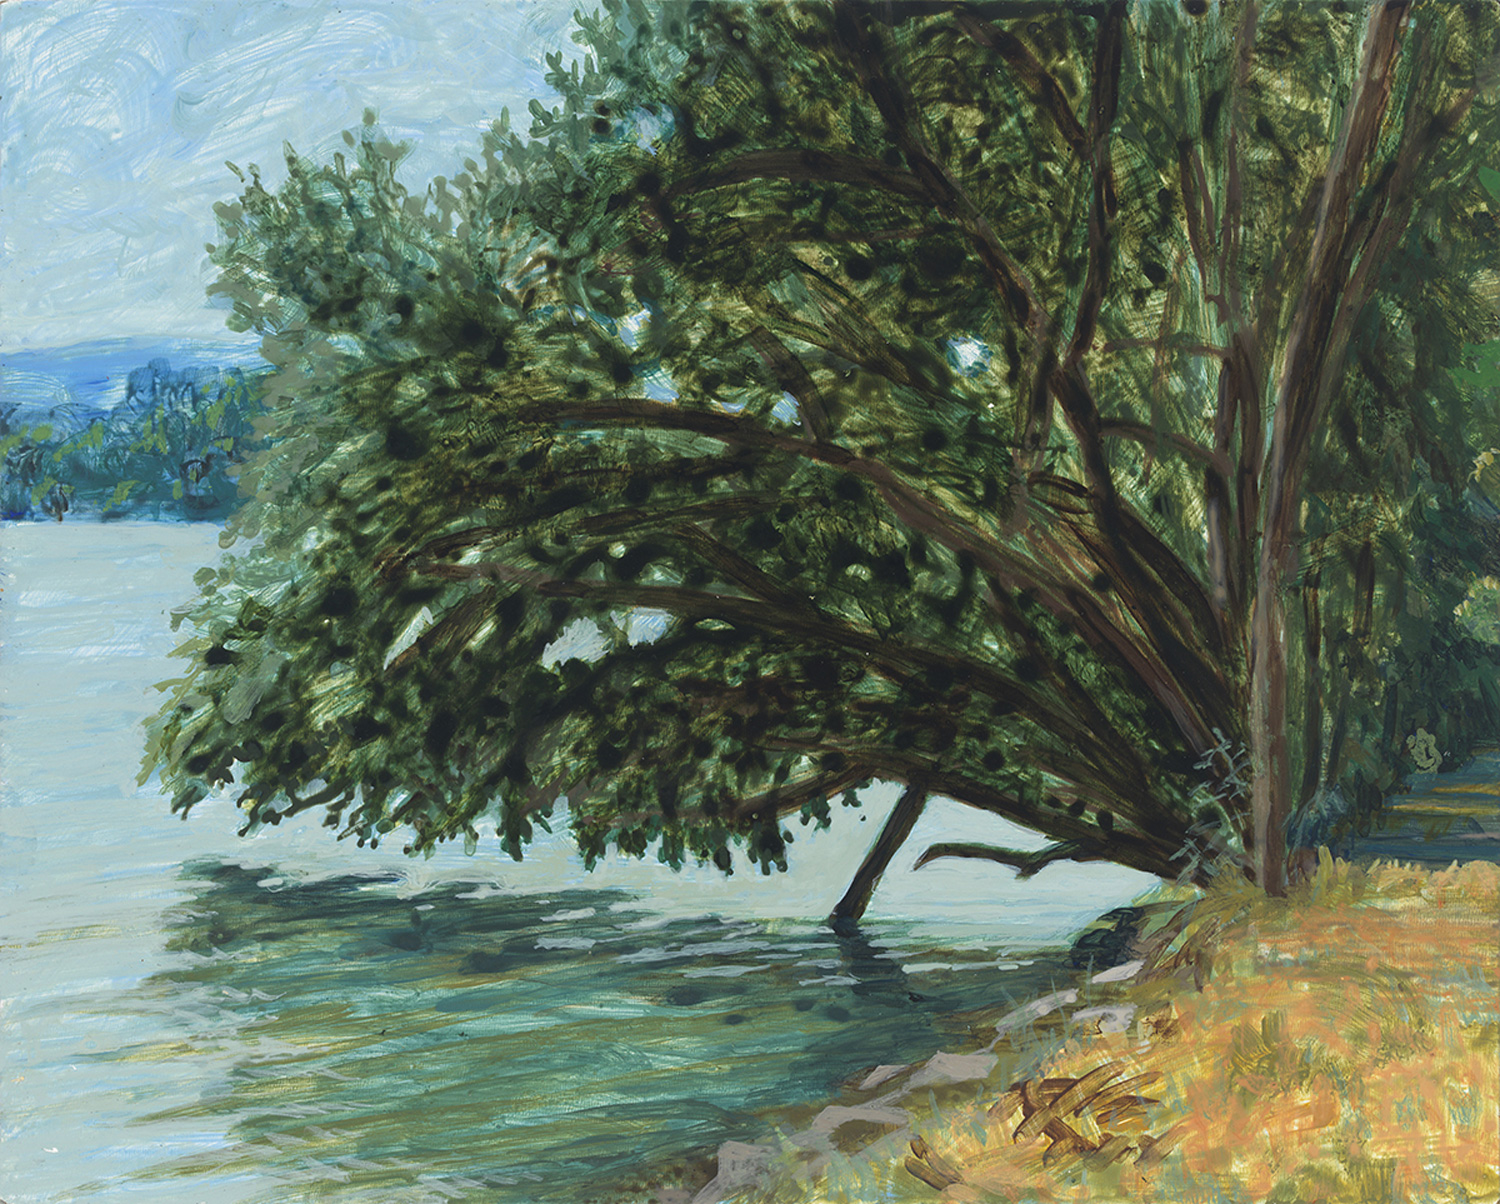 Beaver Site on the Danube